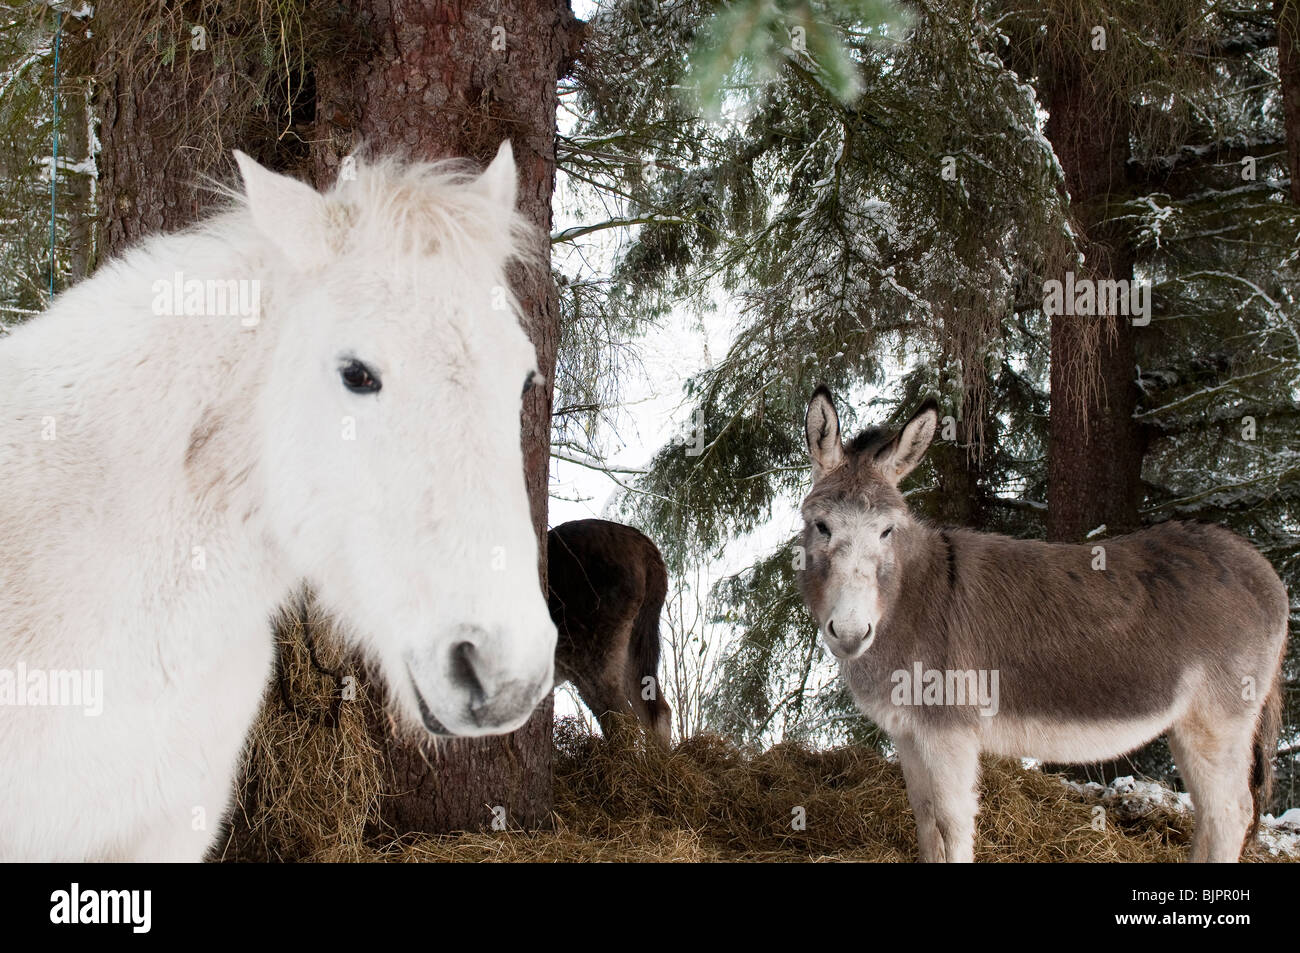 A white highland pony and donkey among the pine trees, Scotland Stock Photo